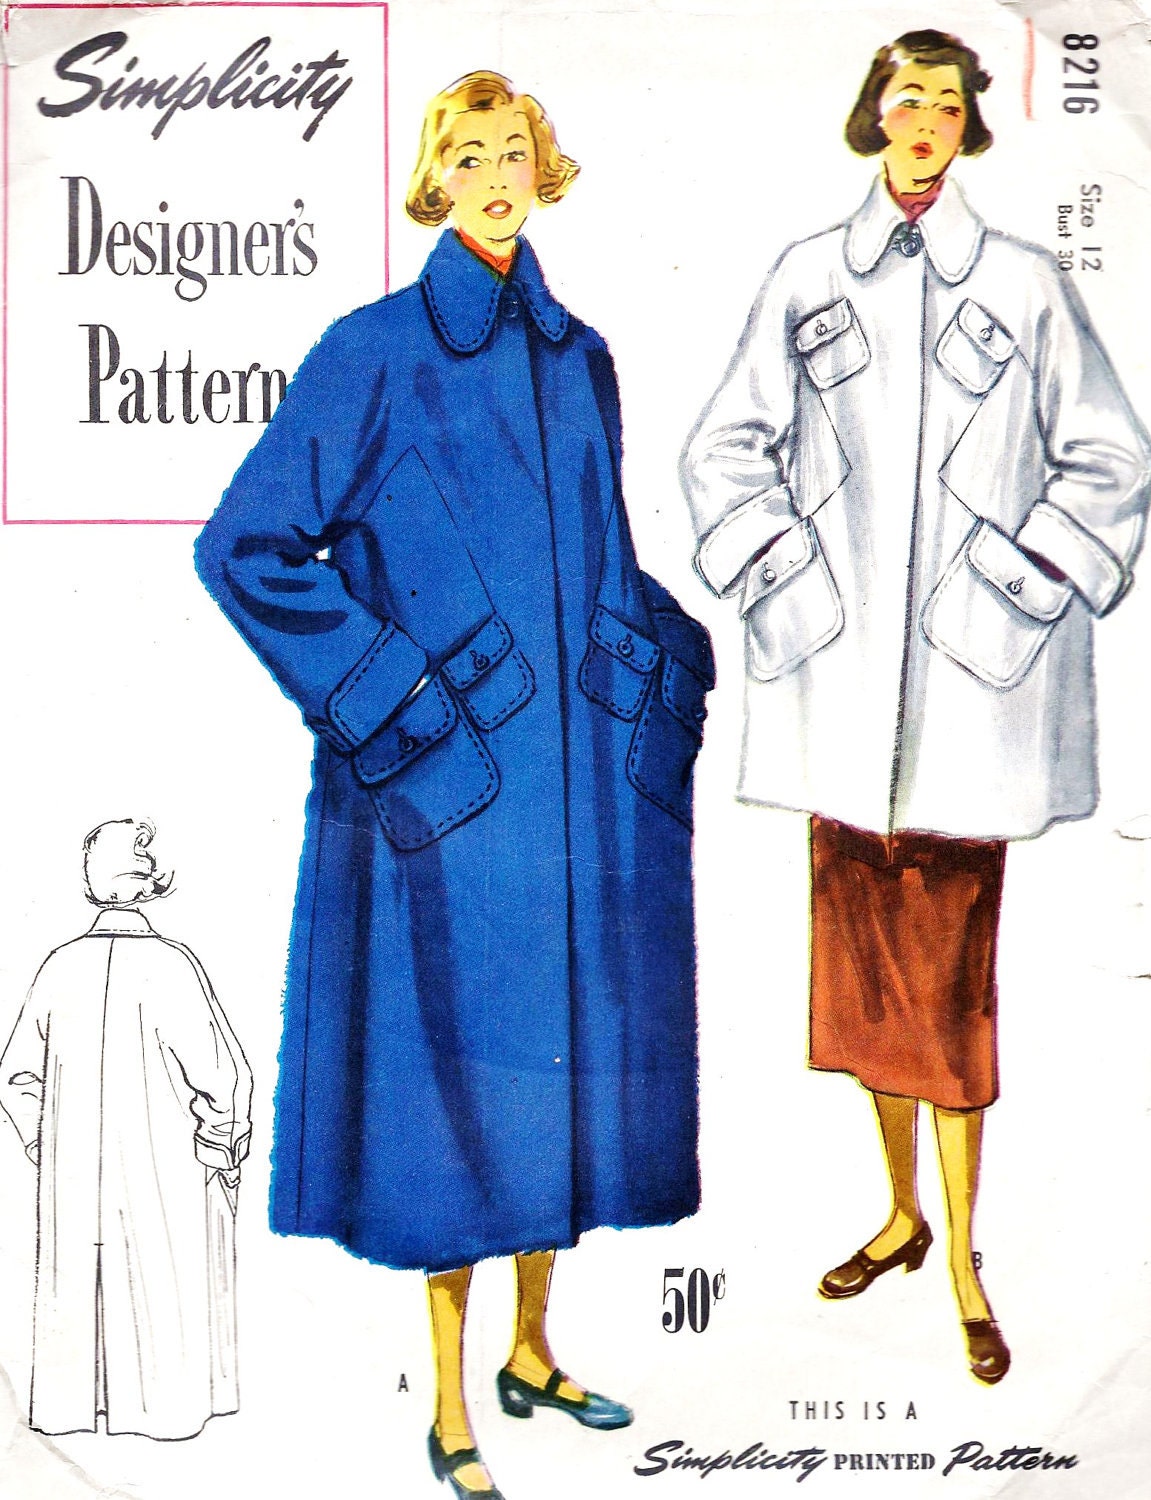 1940s Misses Topcoat Vintage Sewing Pattern, Simplicity Designer's Pattern 8216 bust 30" - MissBettysAttic